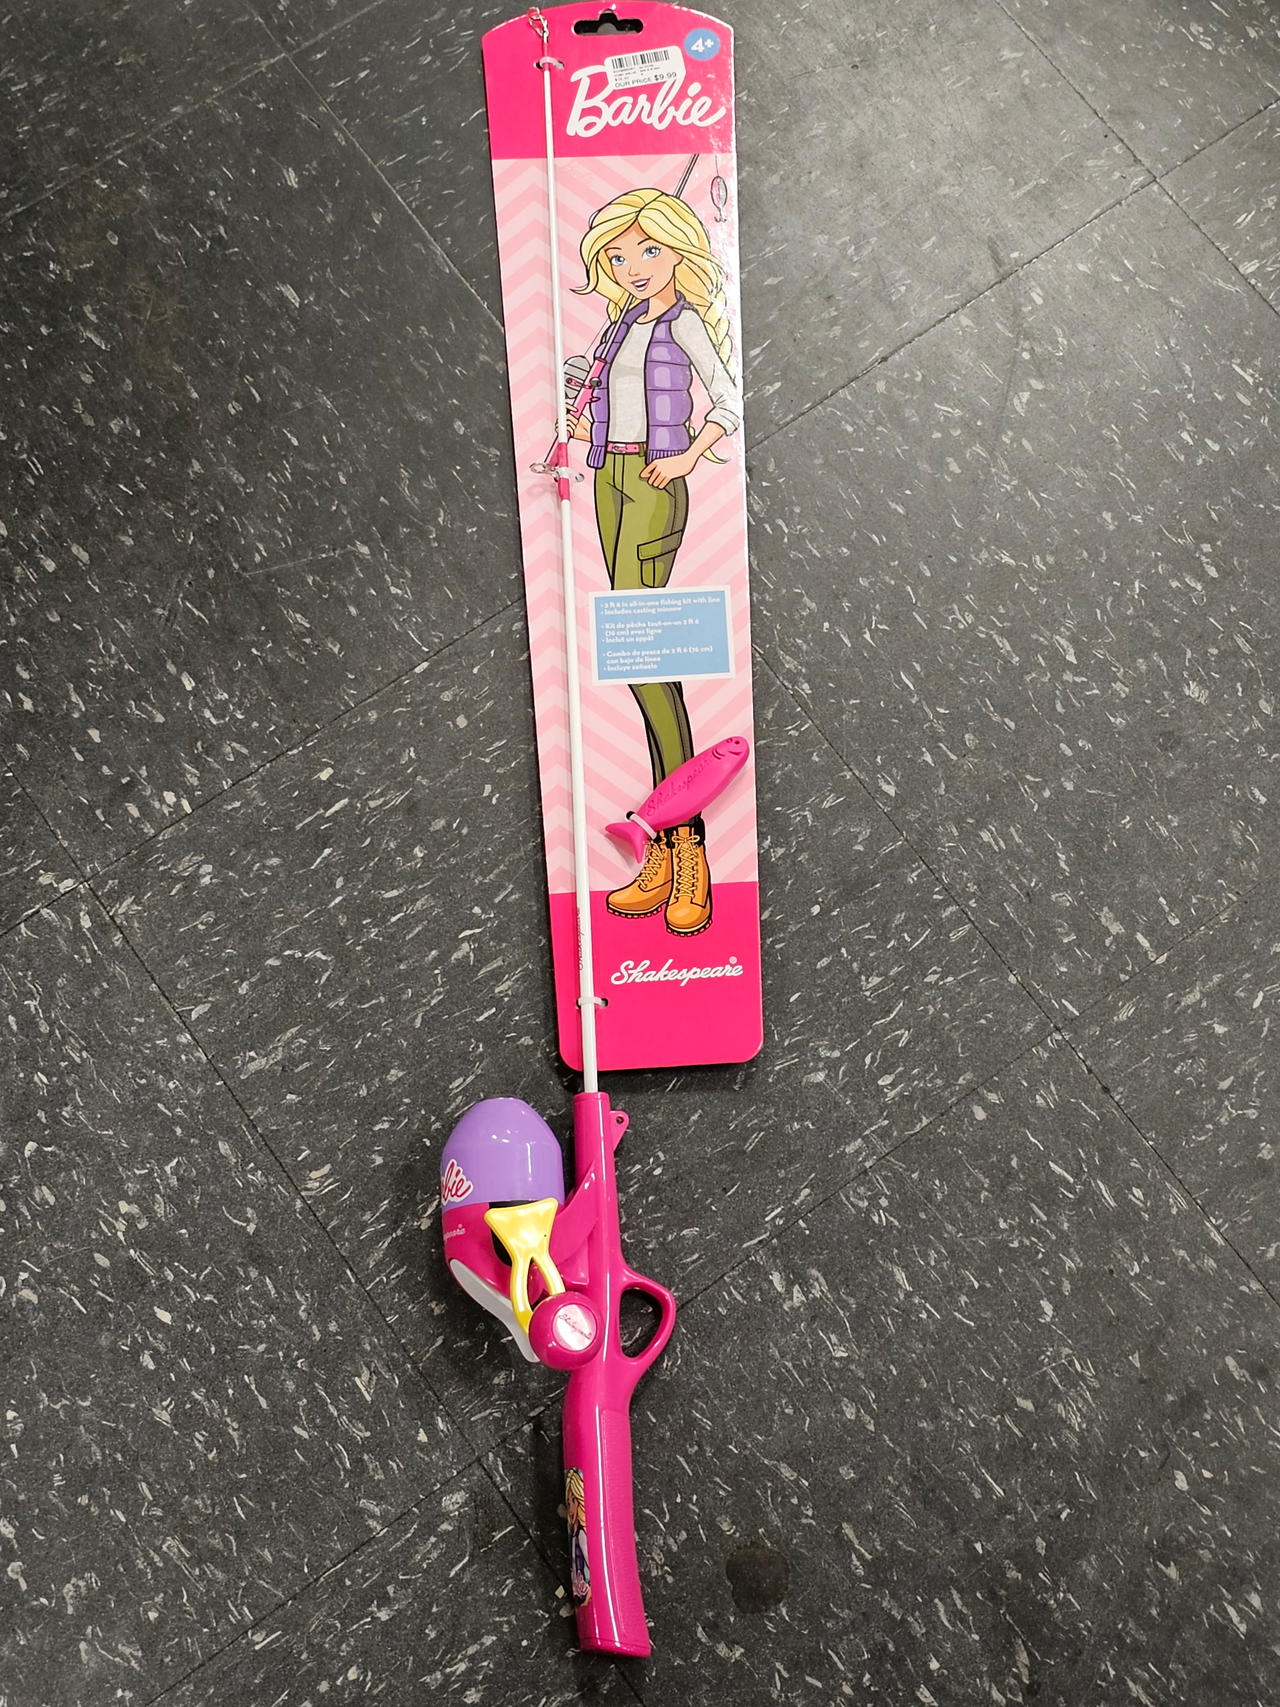 Shakespere Barbie Fishing Kit by Mileymouse101 on DeviantArt